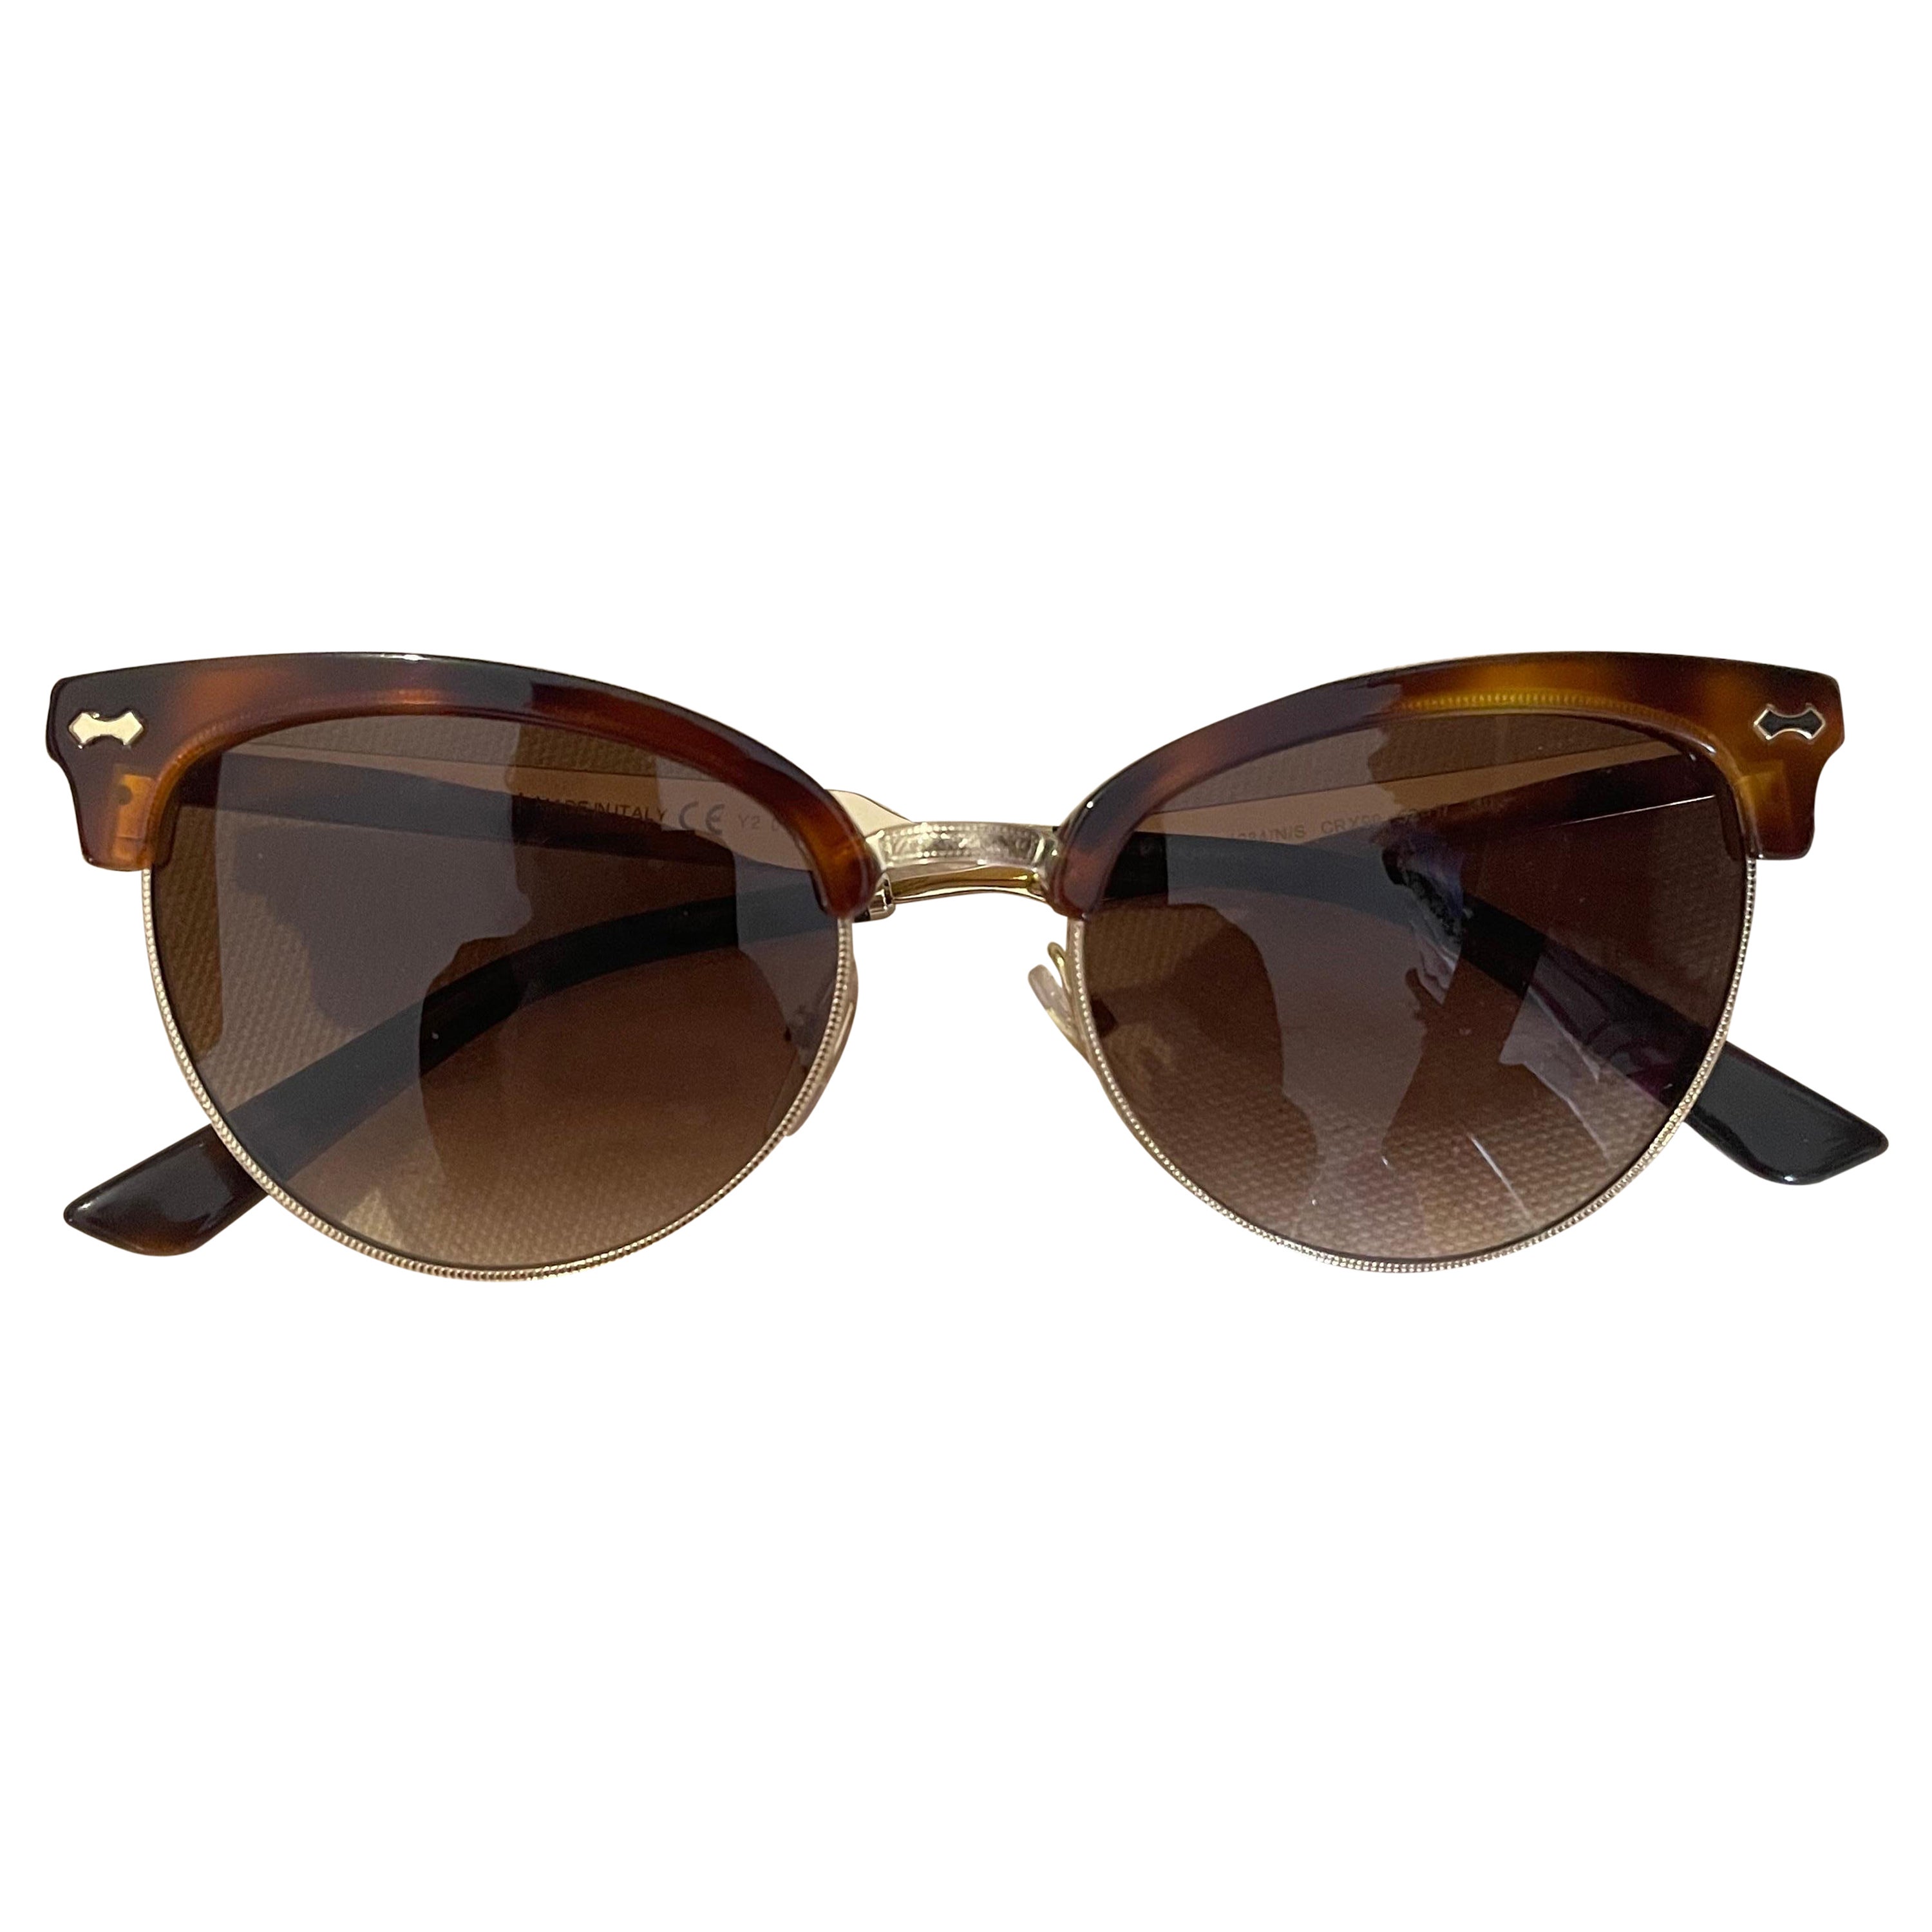 Vintage Gucci sunglasses. For Sale